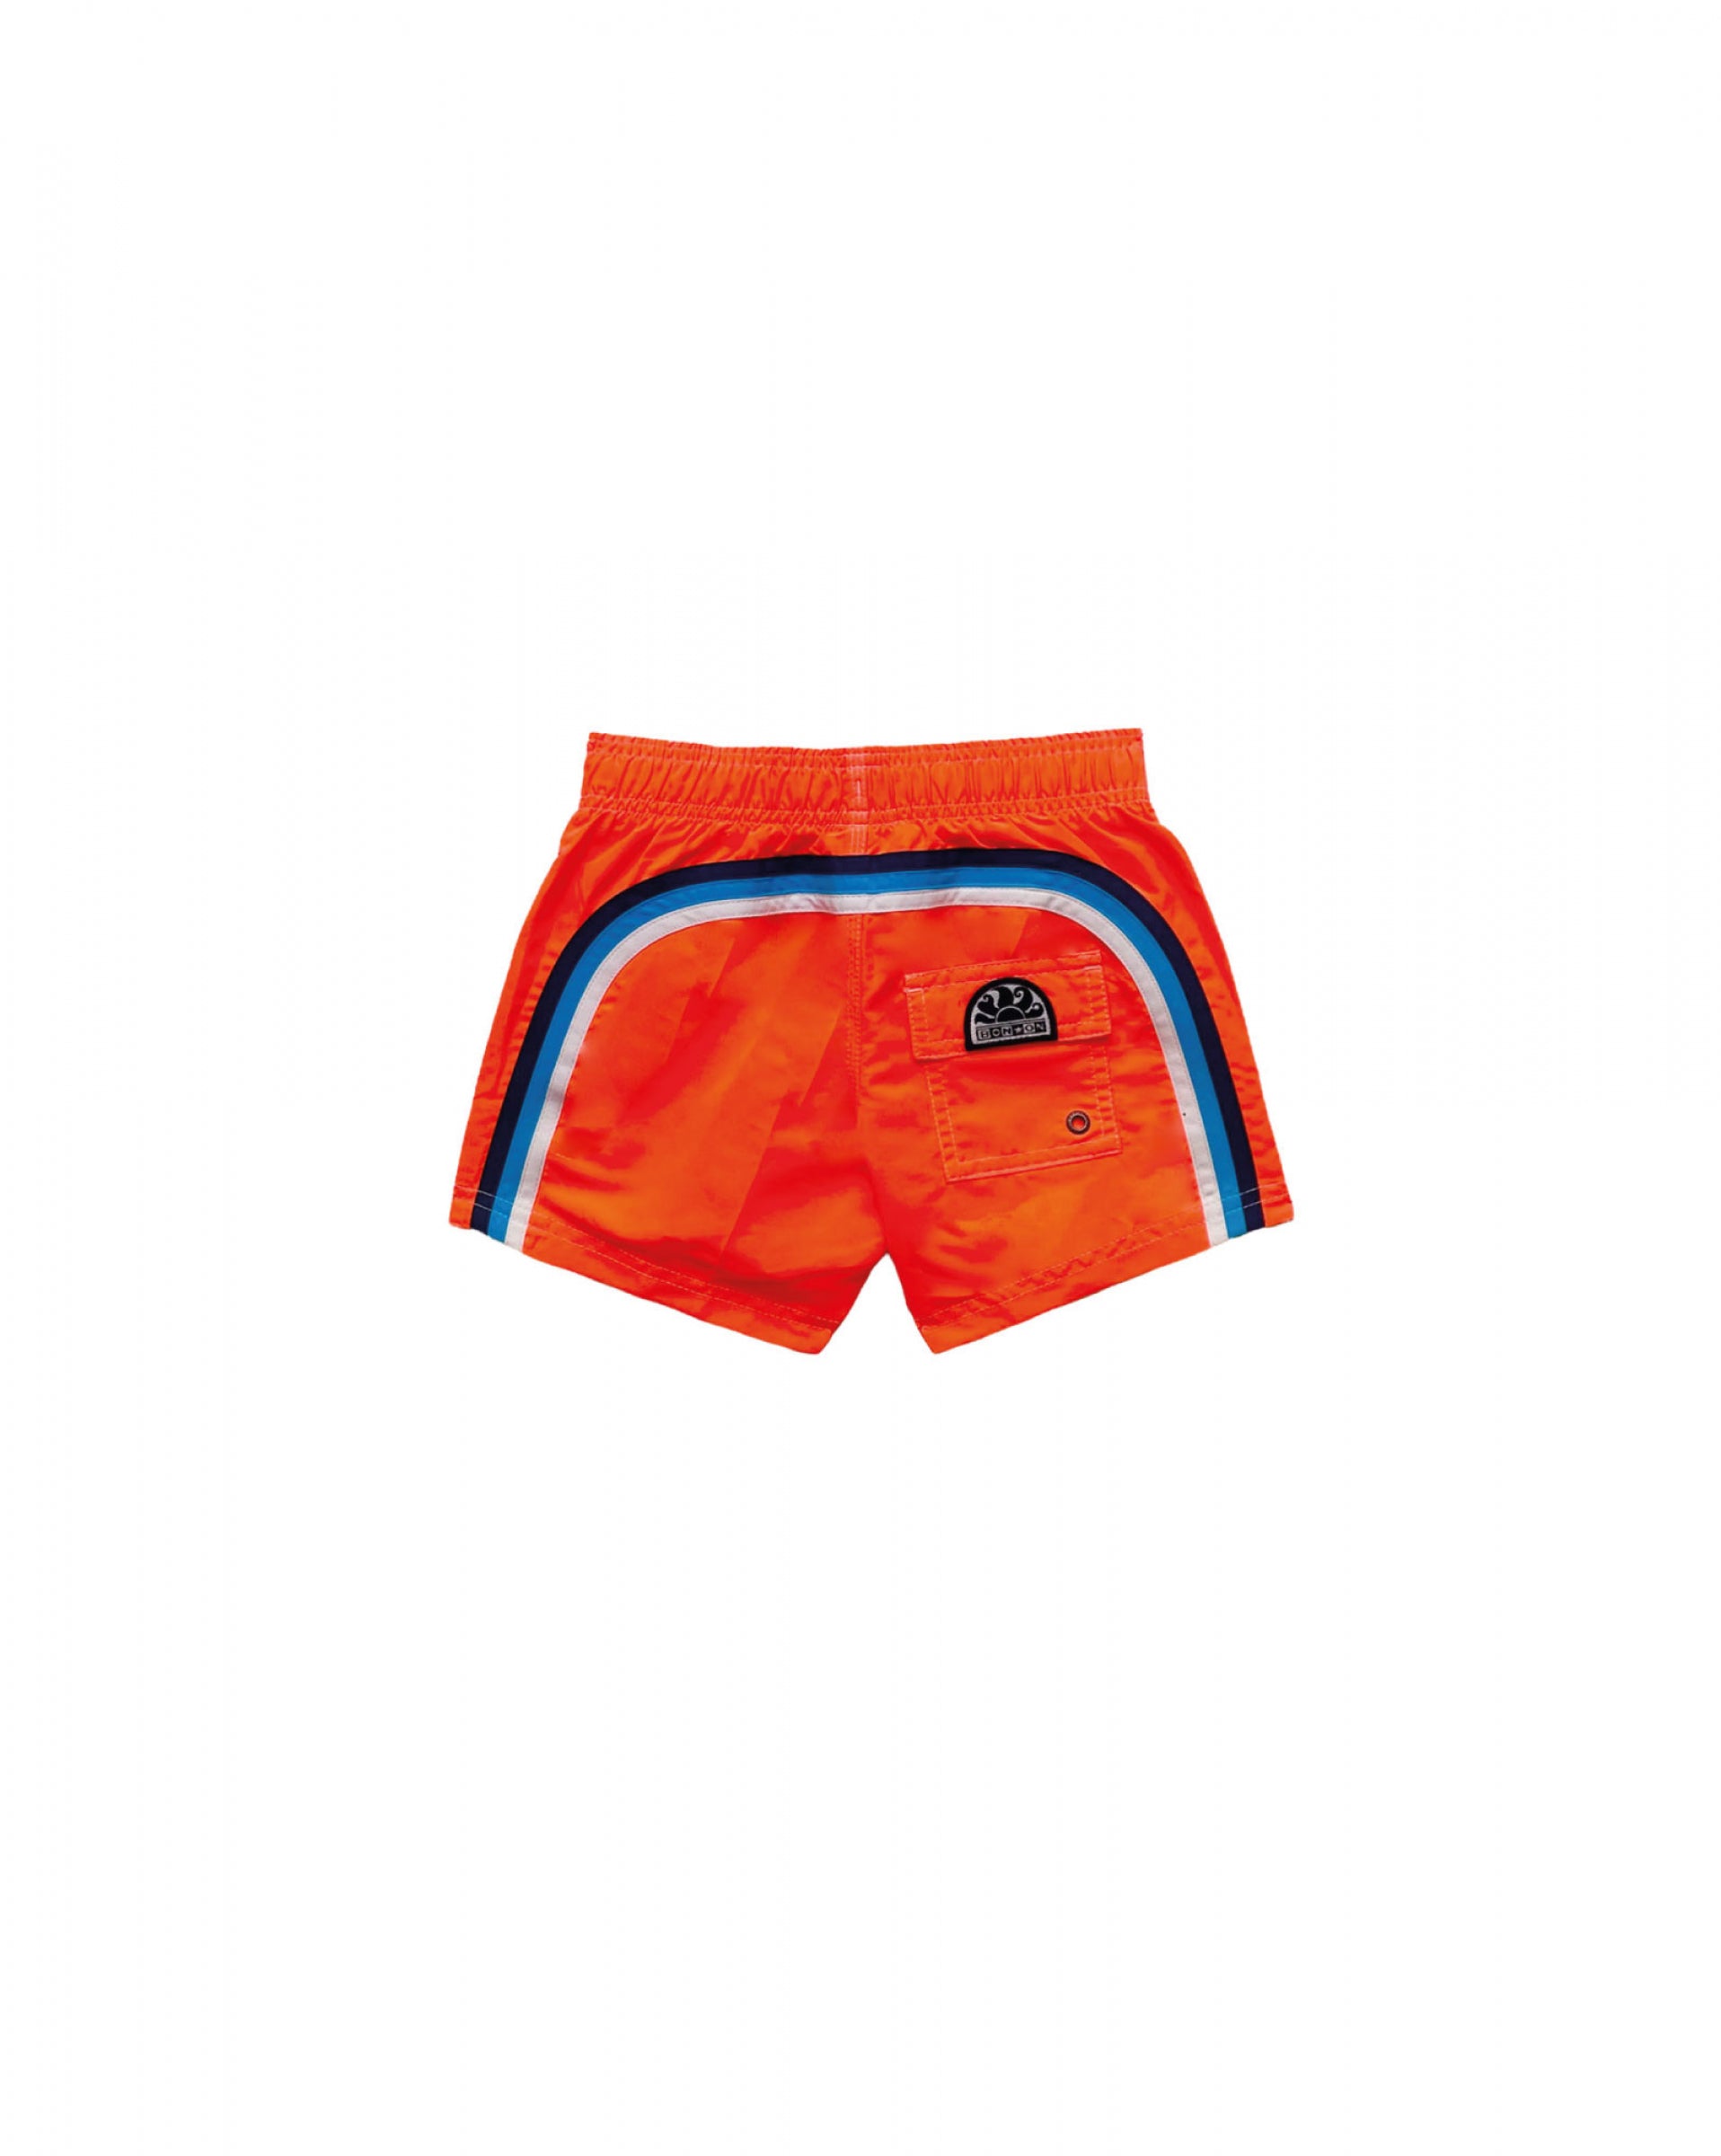 Boys & Girls Orange Shorts